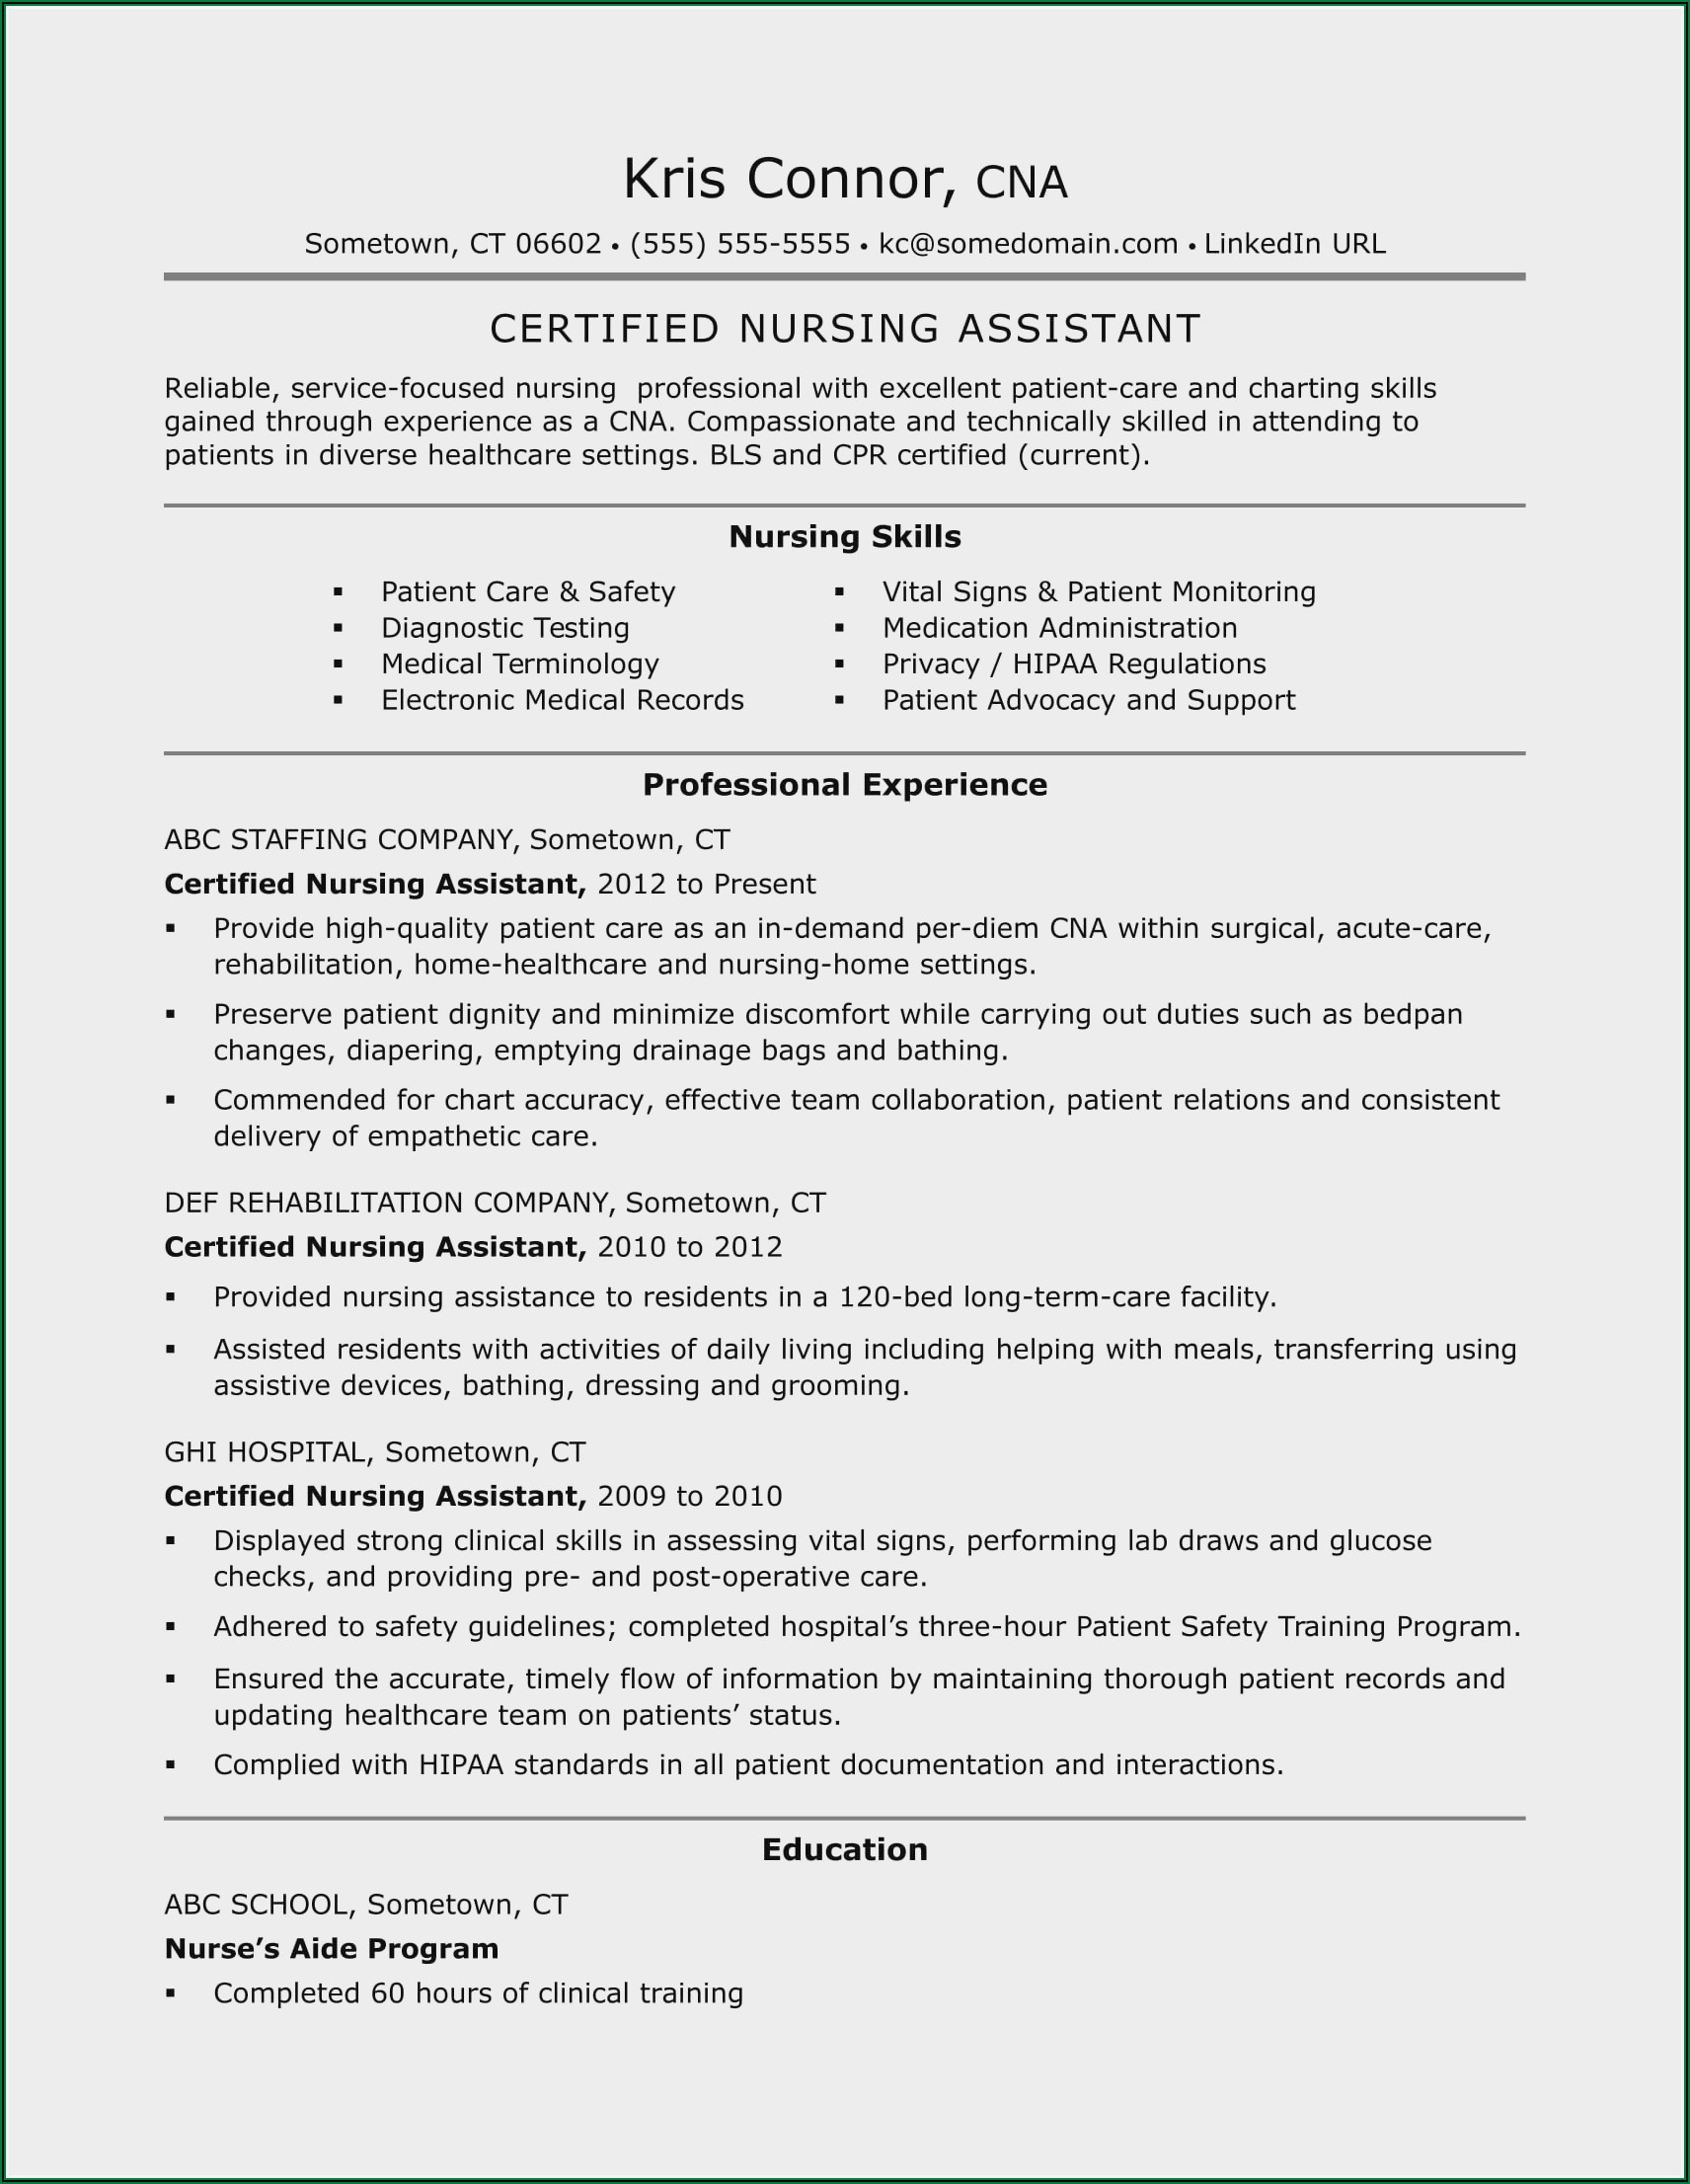 Resume For Certified Nursing Assistant